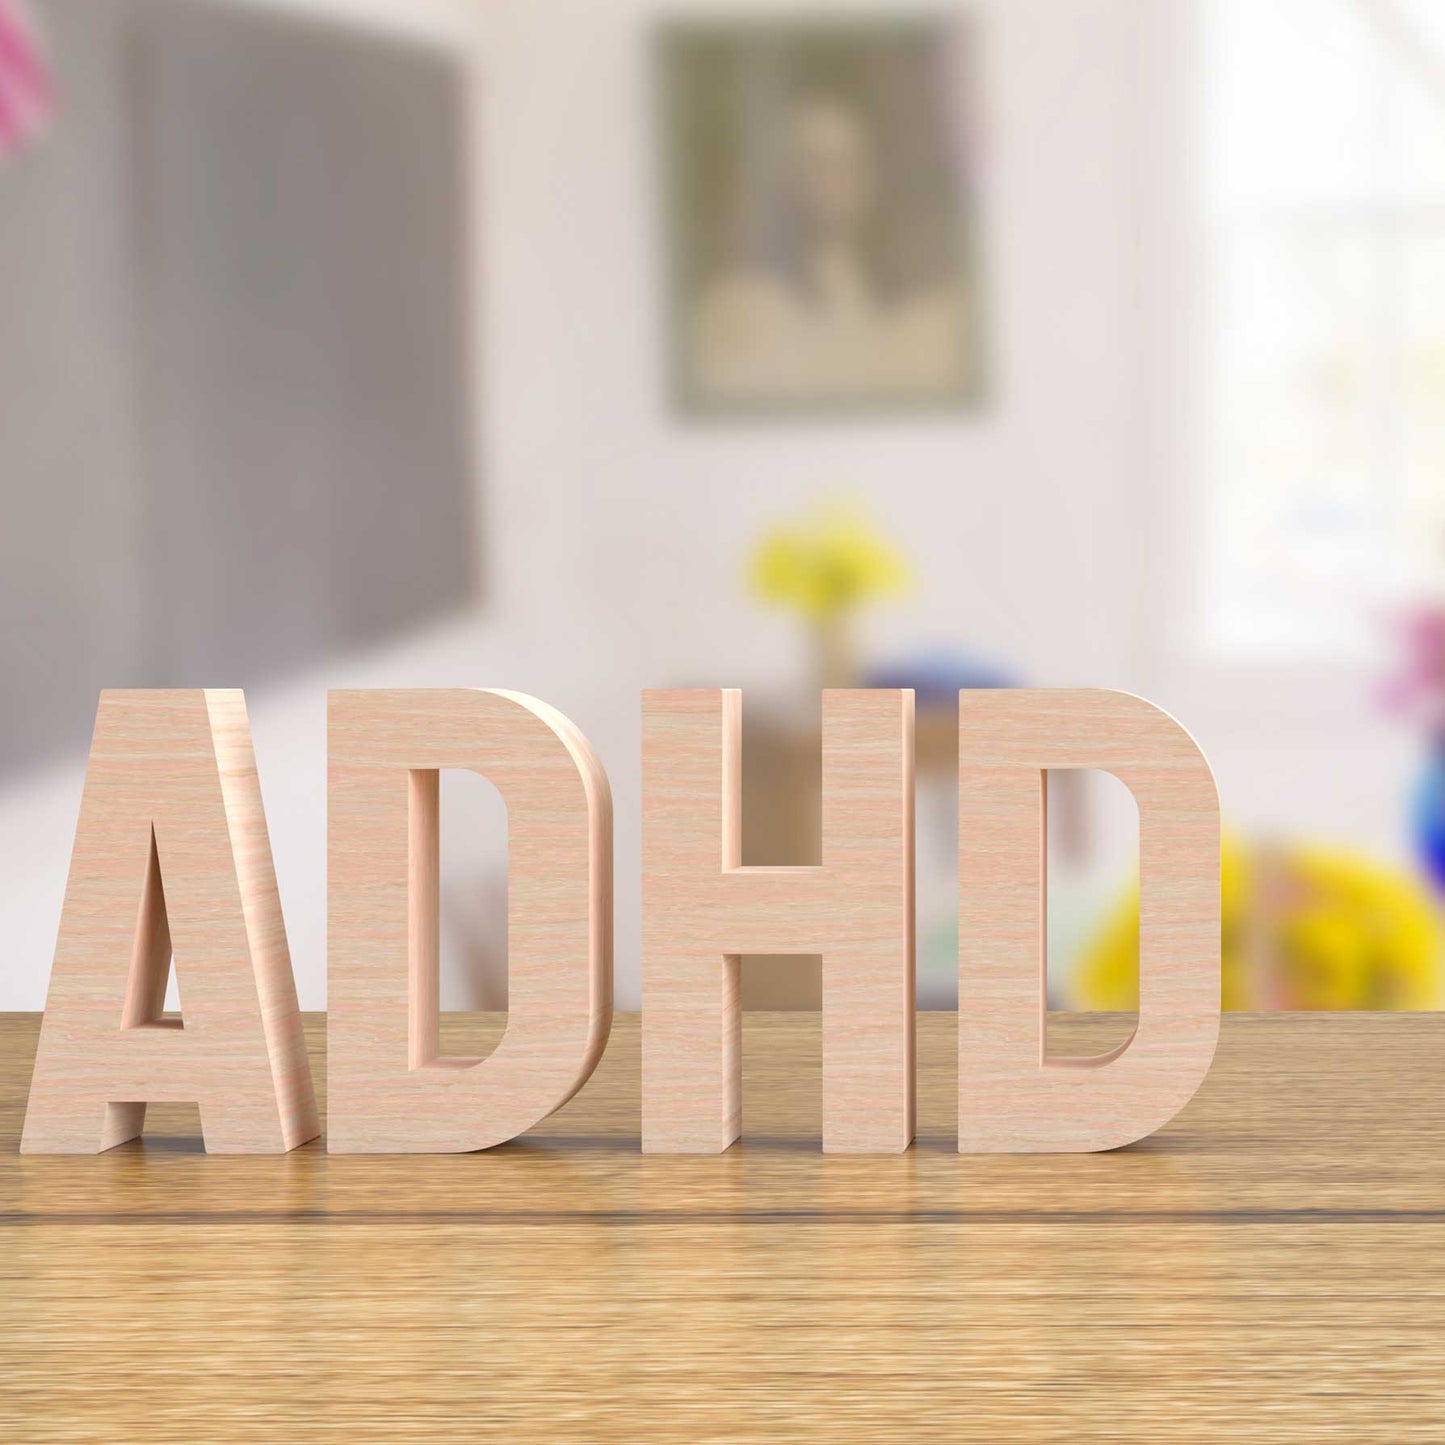 Best Nootropics for ADHD